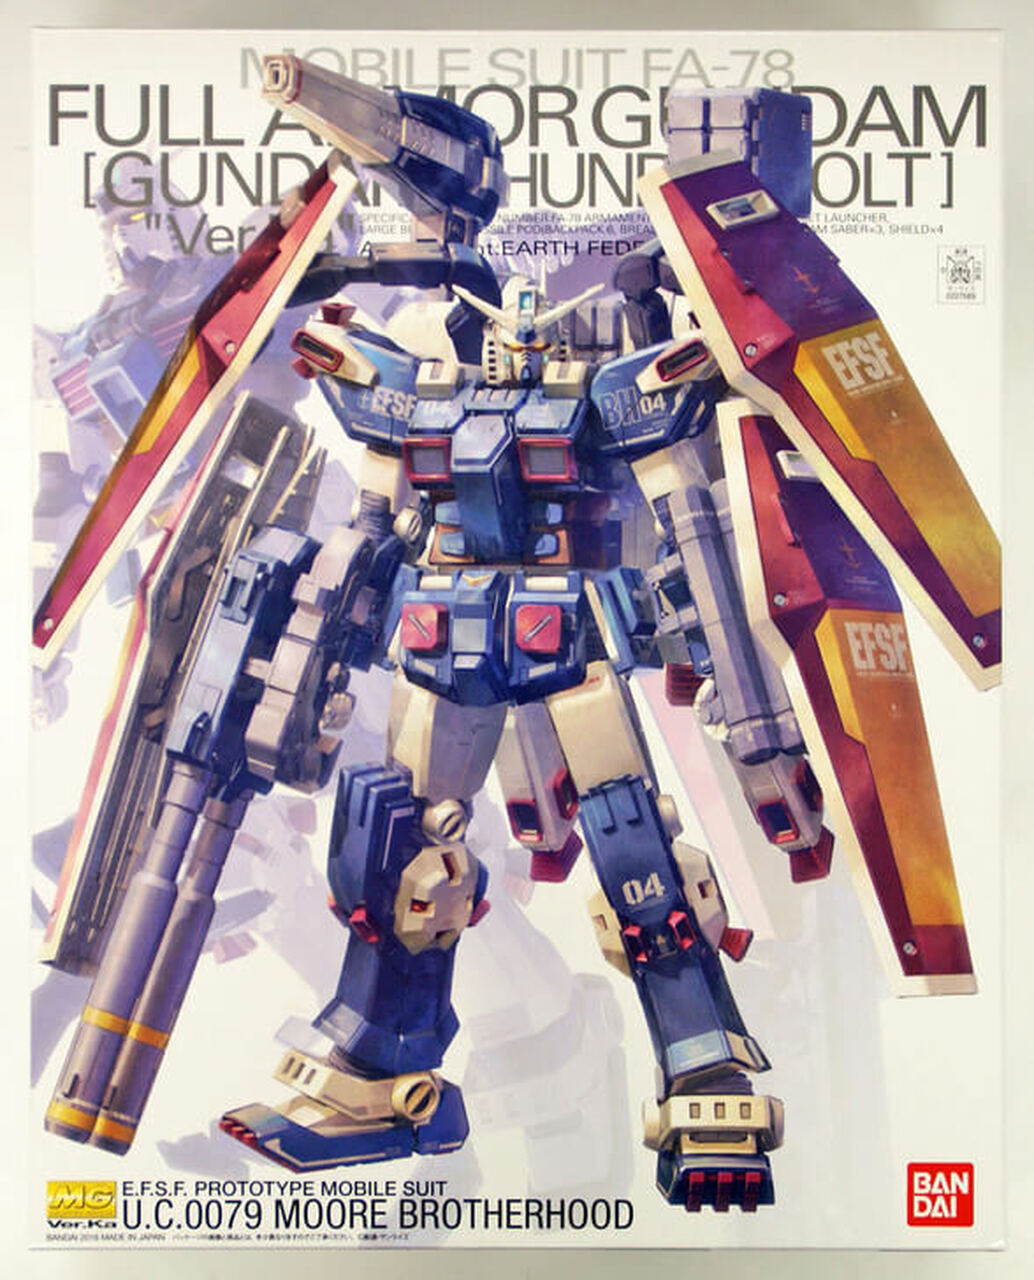 FA-78 Full Armor Gundam "Gundam Thunderbolt" Ver. Ka Mg 1/100 Model Kit